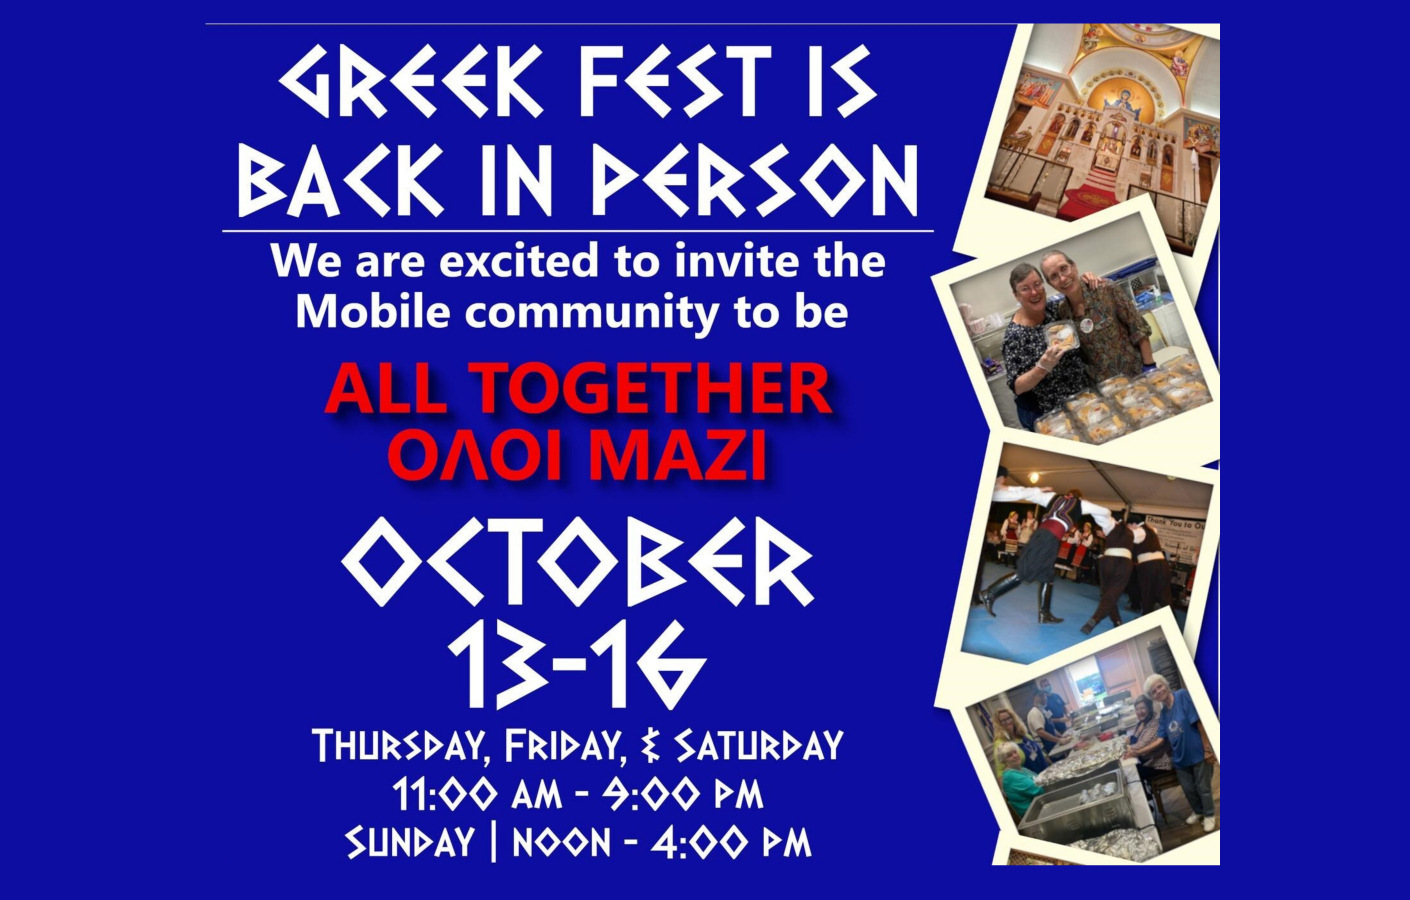 GREEK FEST